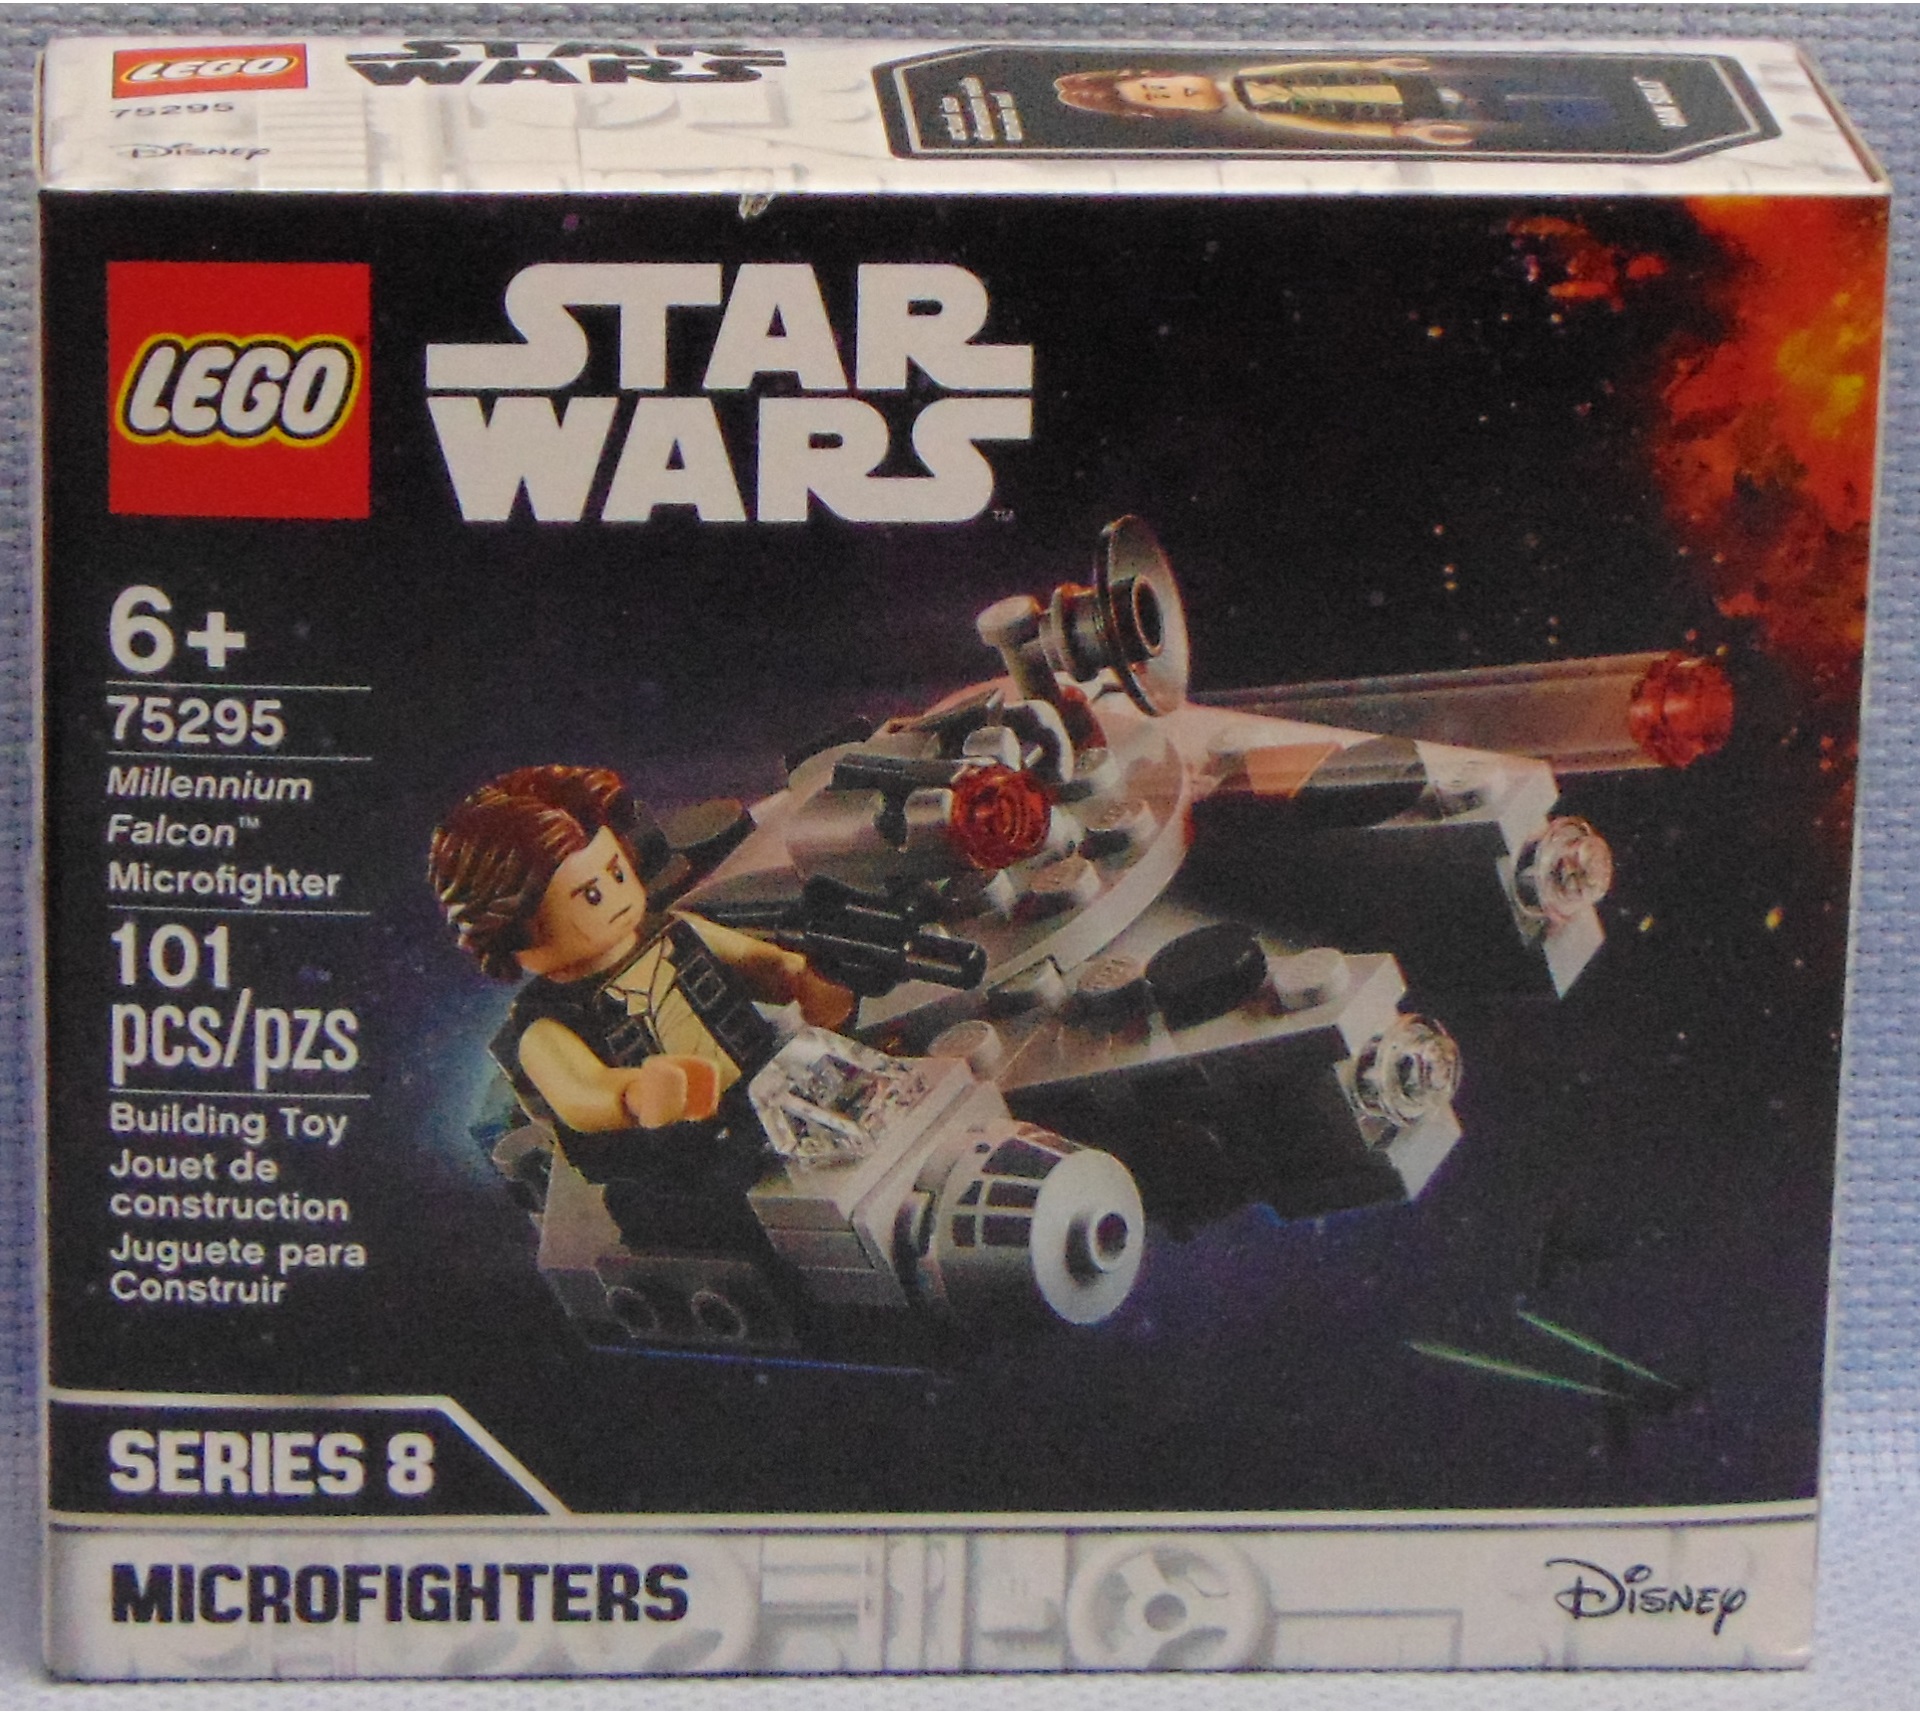 LEGO 75295 Star Wars TM Millennium Falcon Microfighter